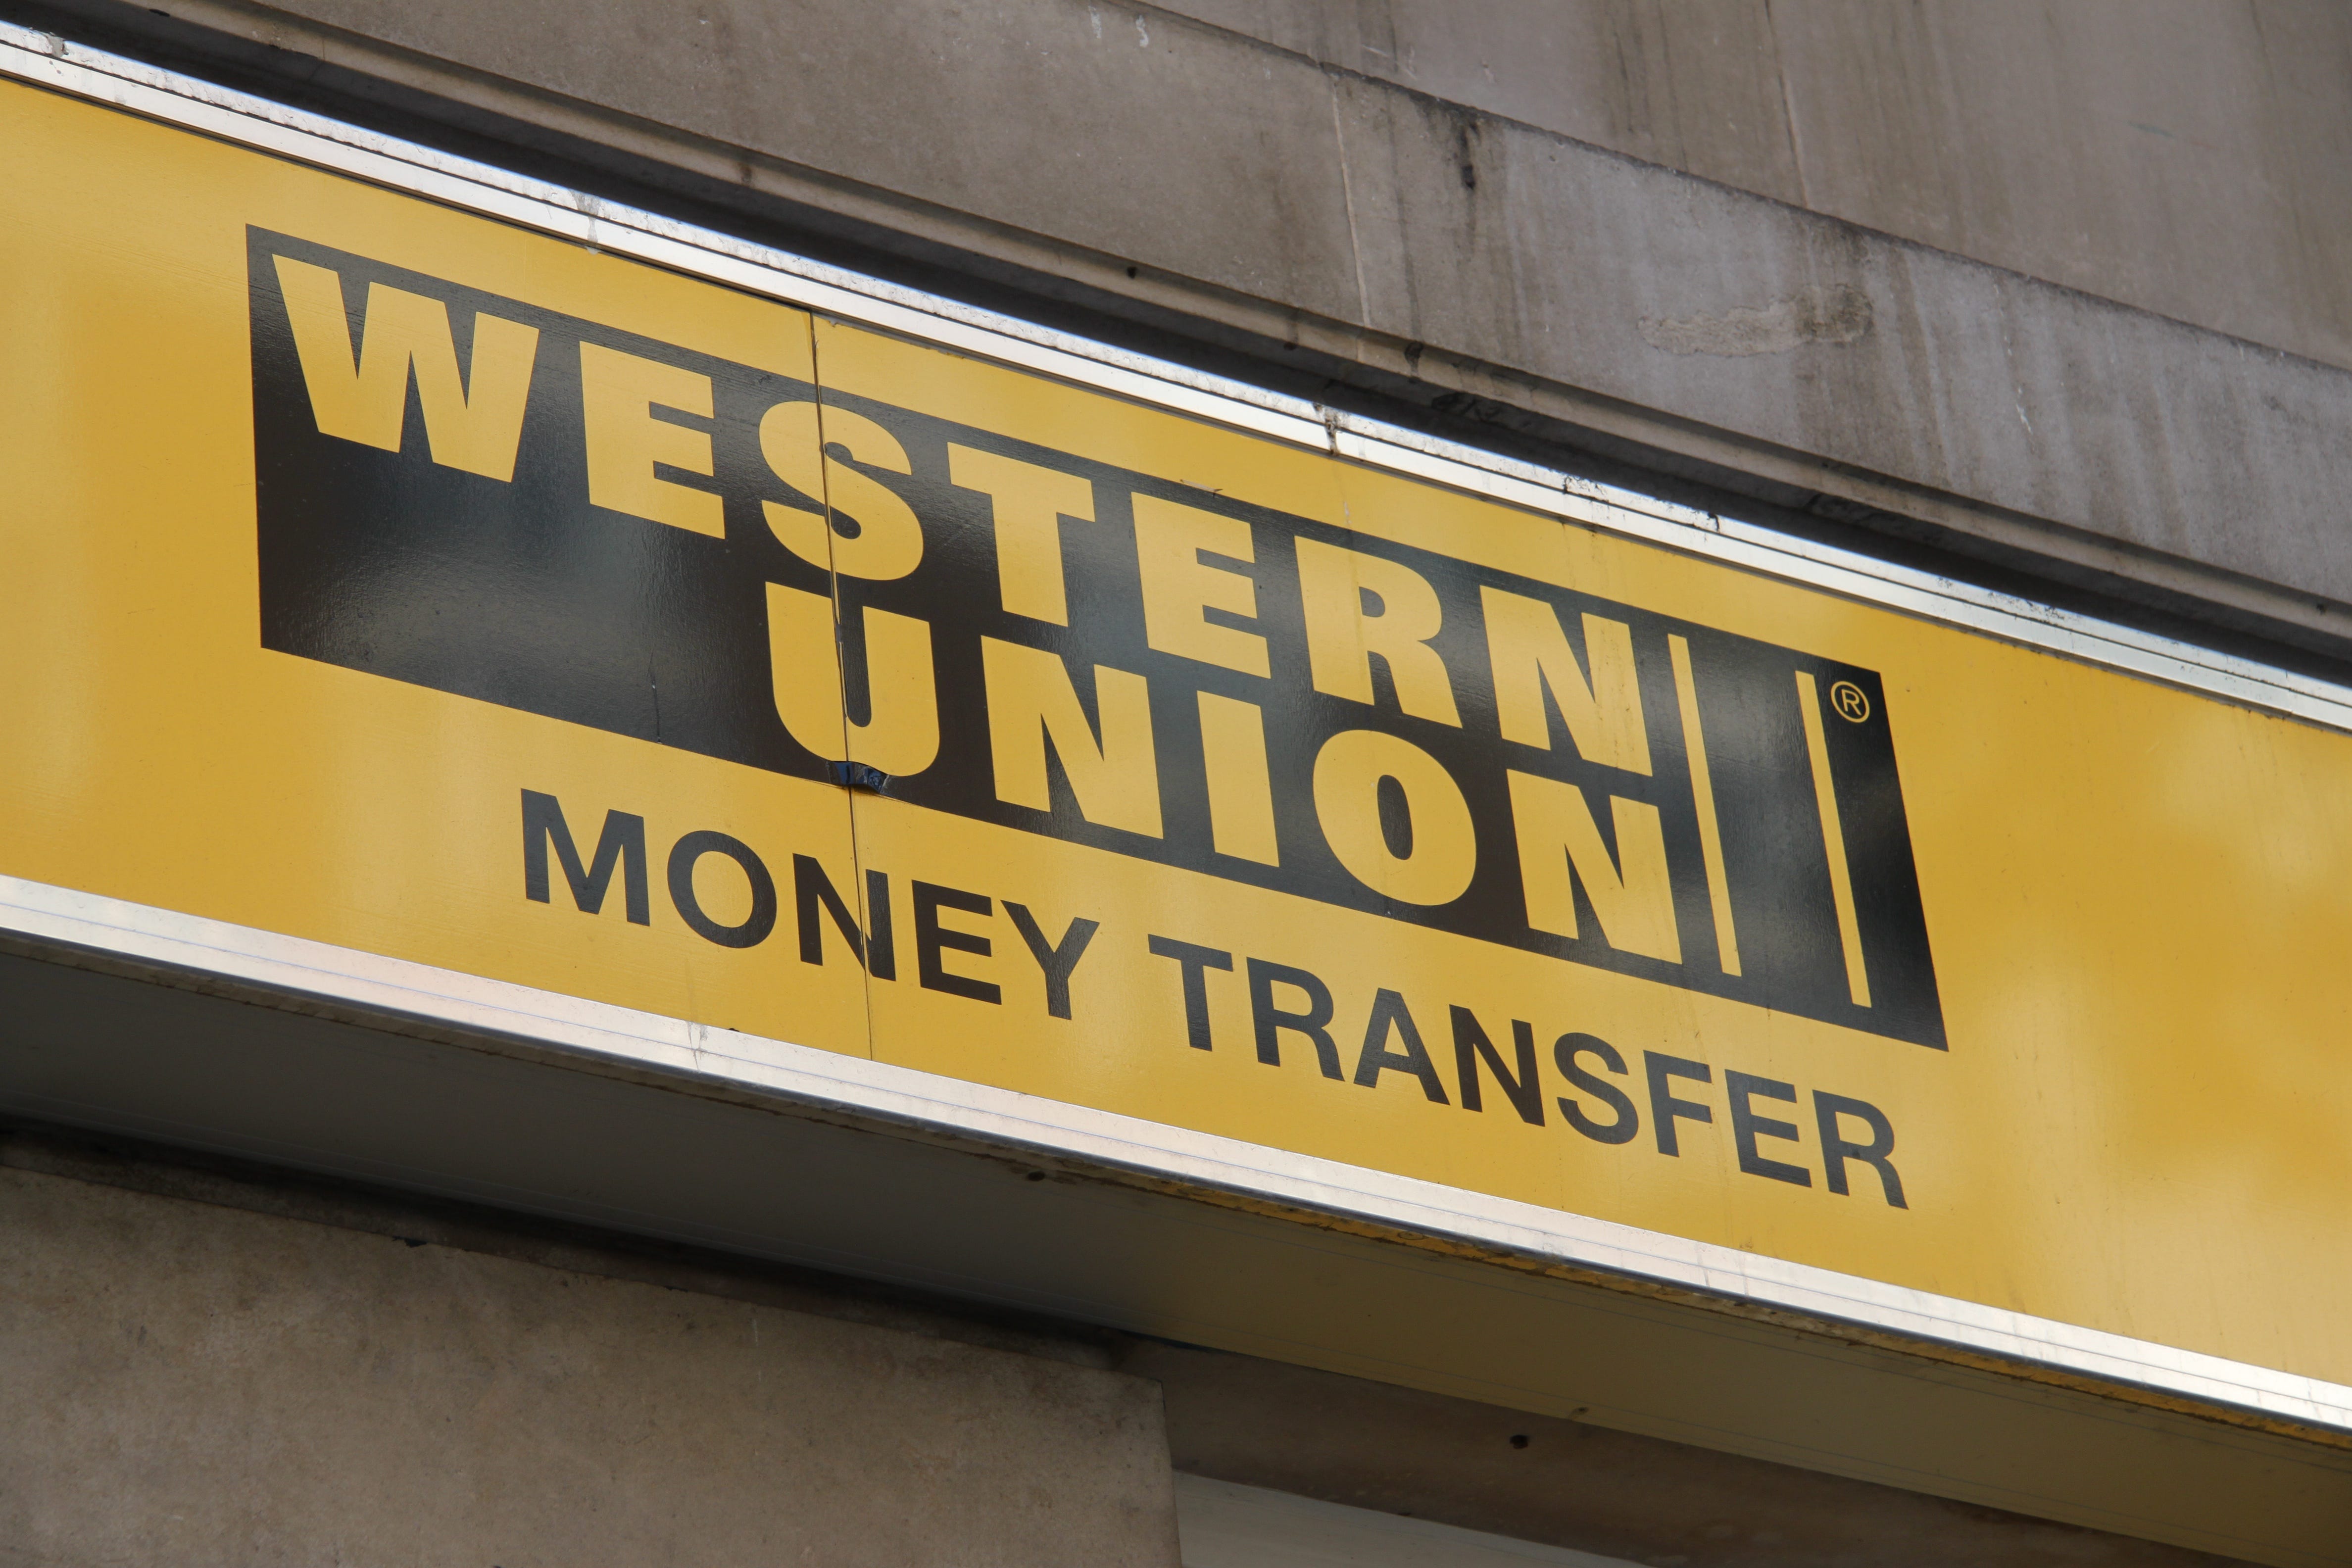 Western Union - Money transfer service - St. Augustine, Florida - Zaubee